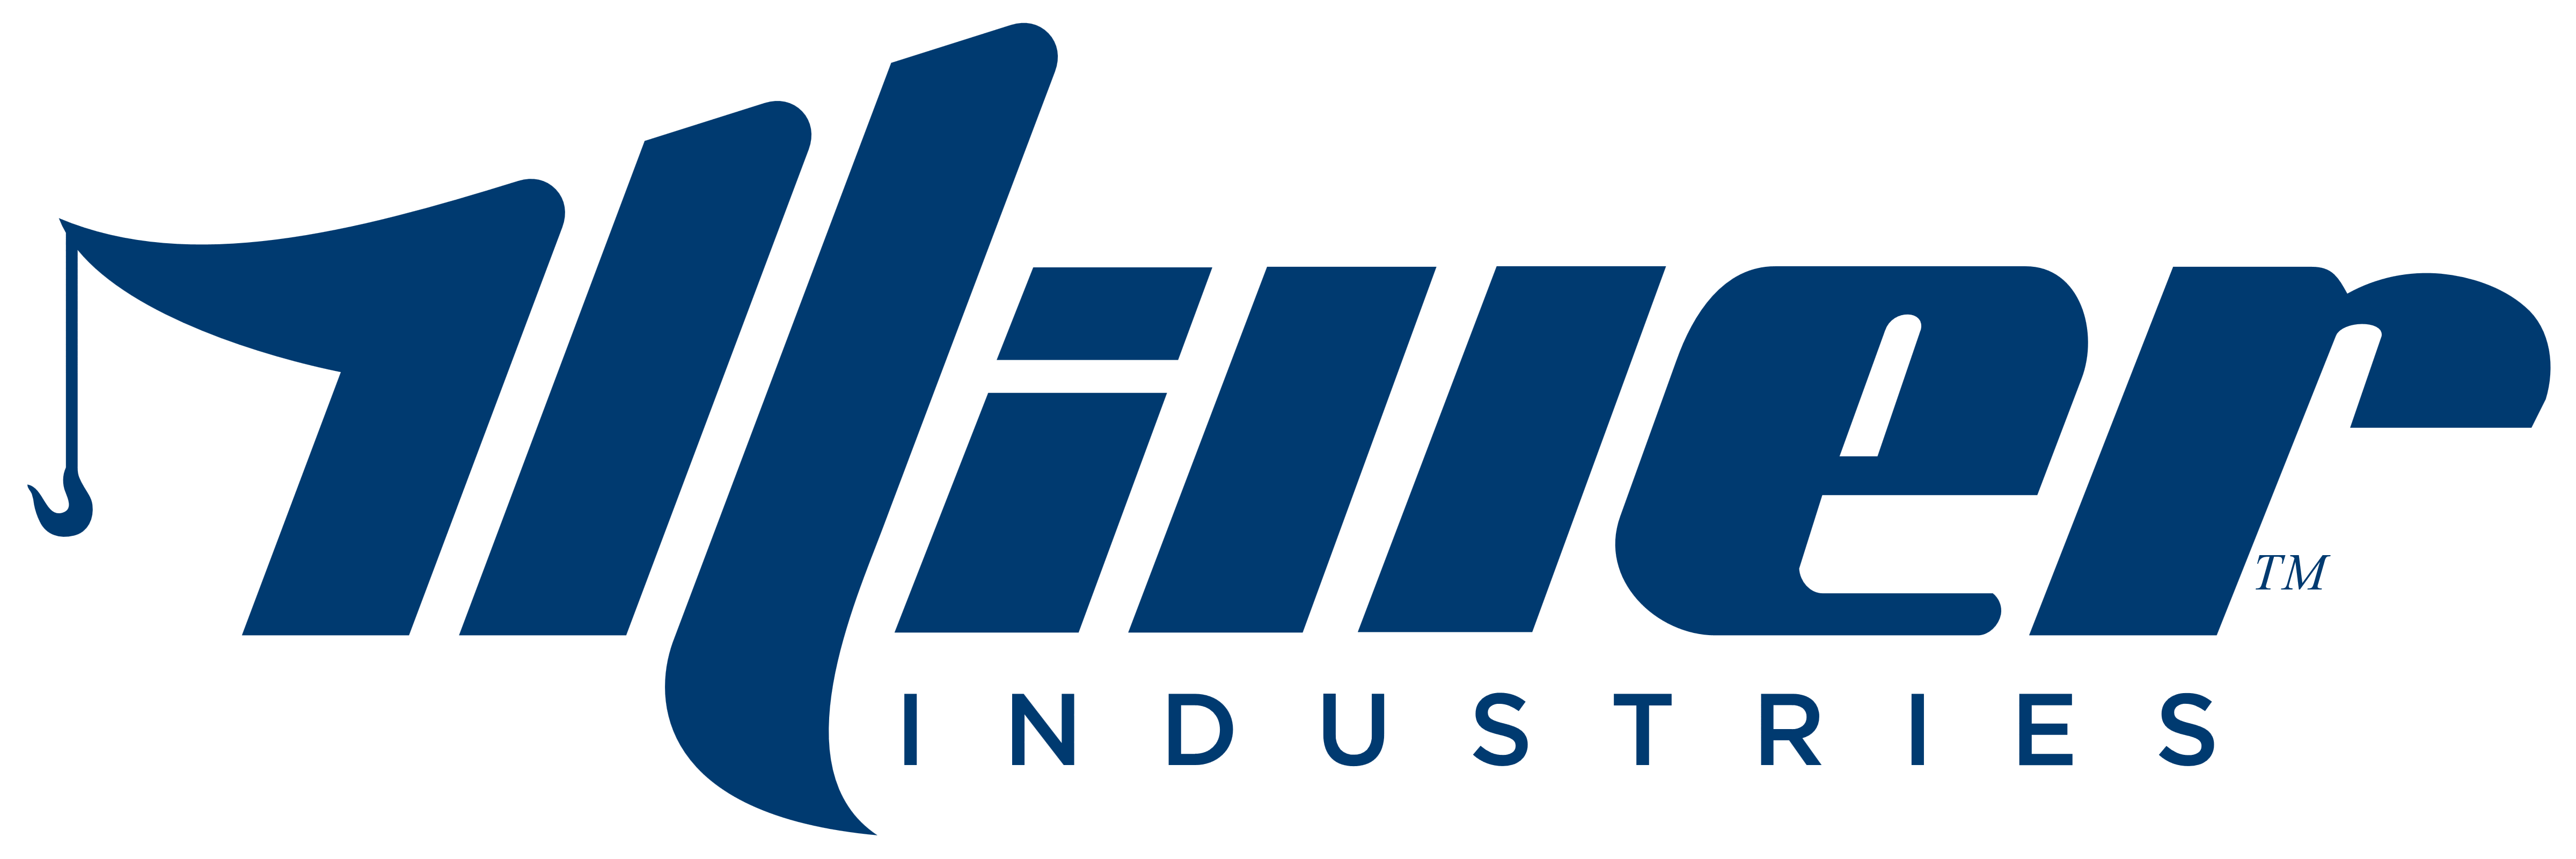 Miller Industries – Logos Download - Miller, Transparent background PNG HD thumbnail